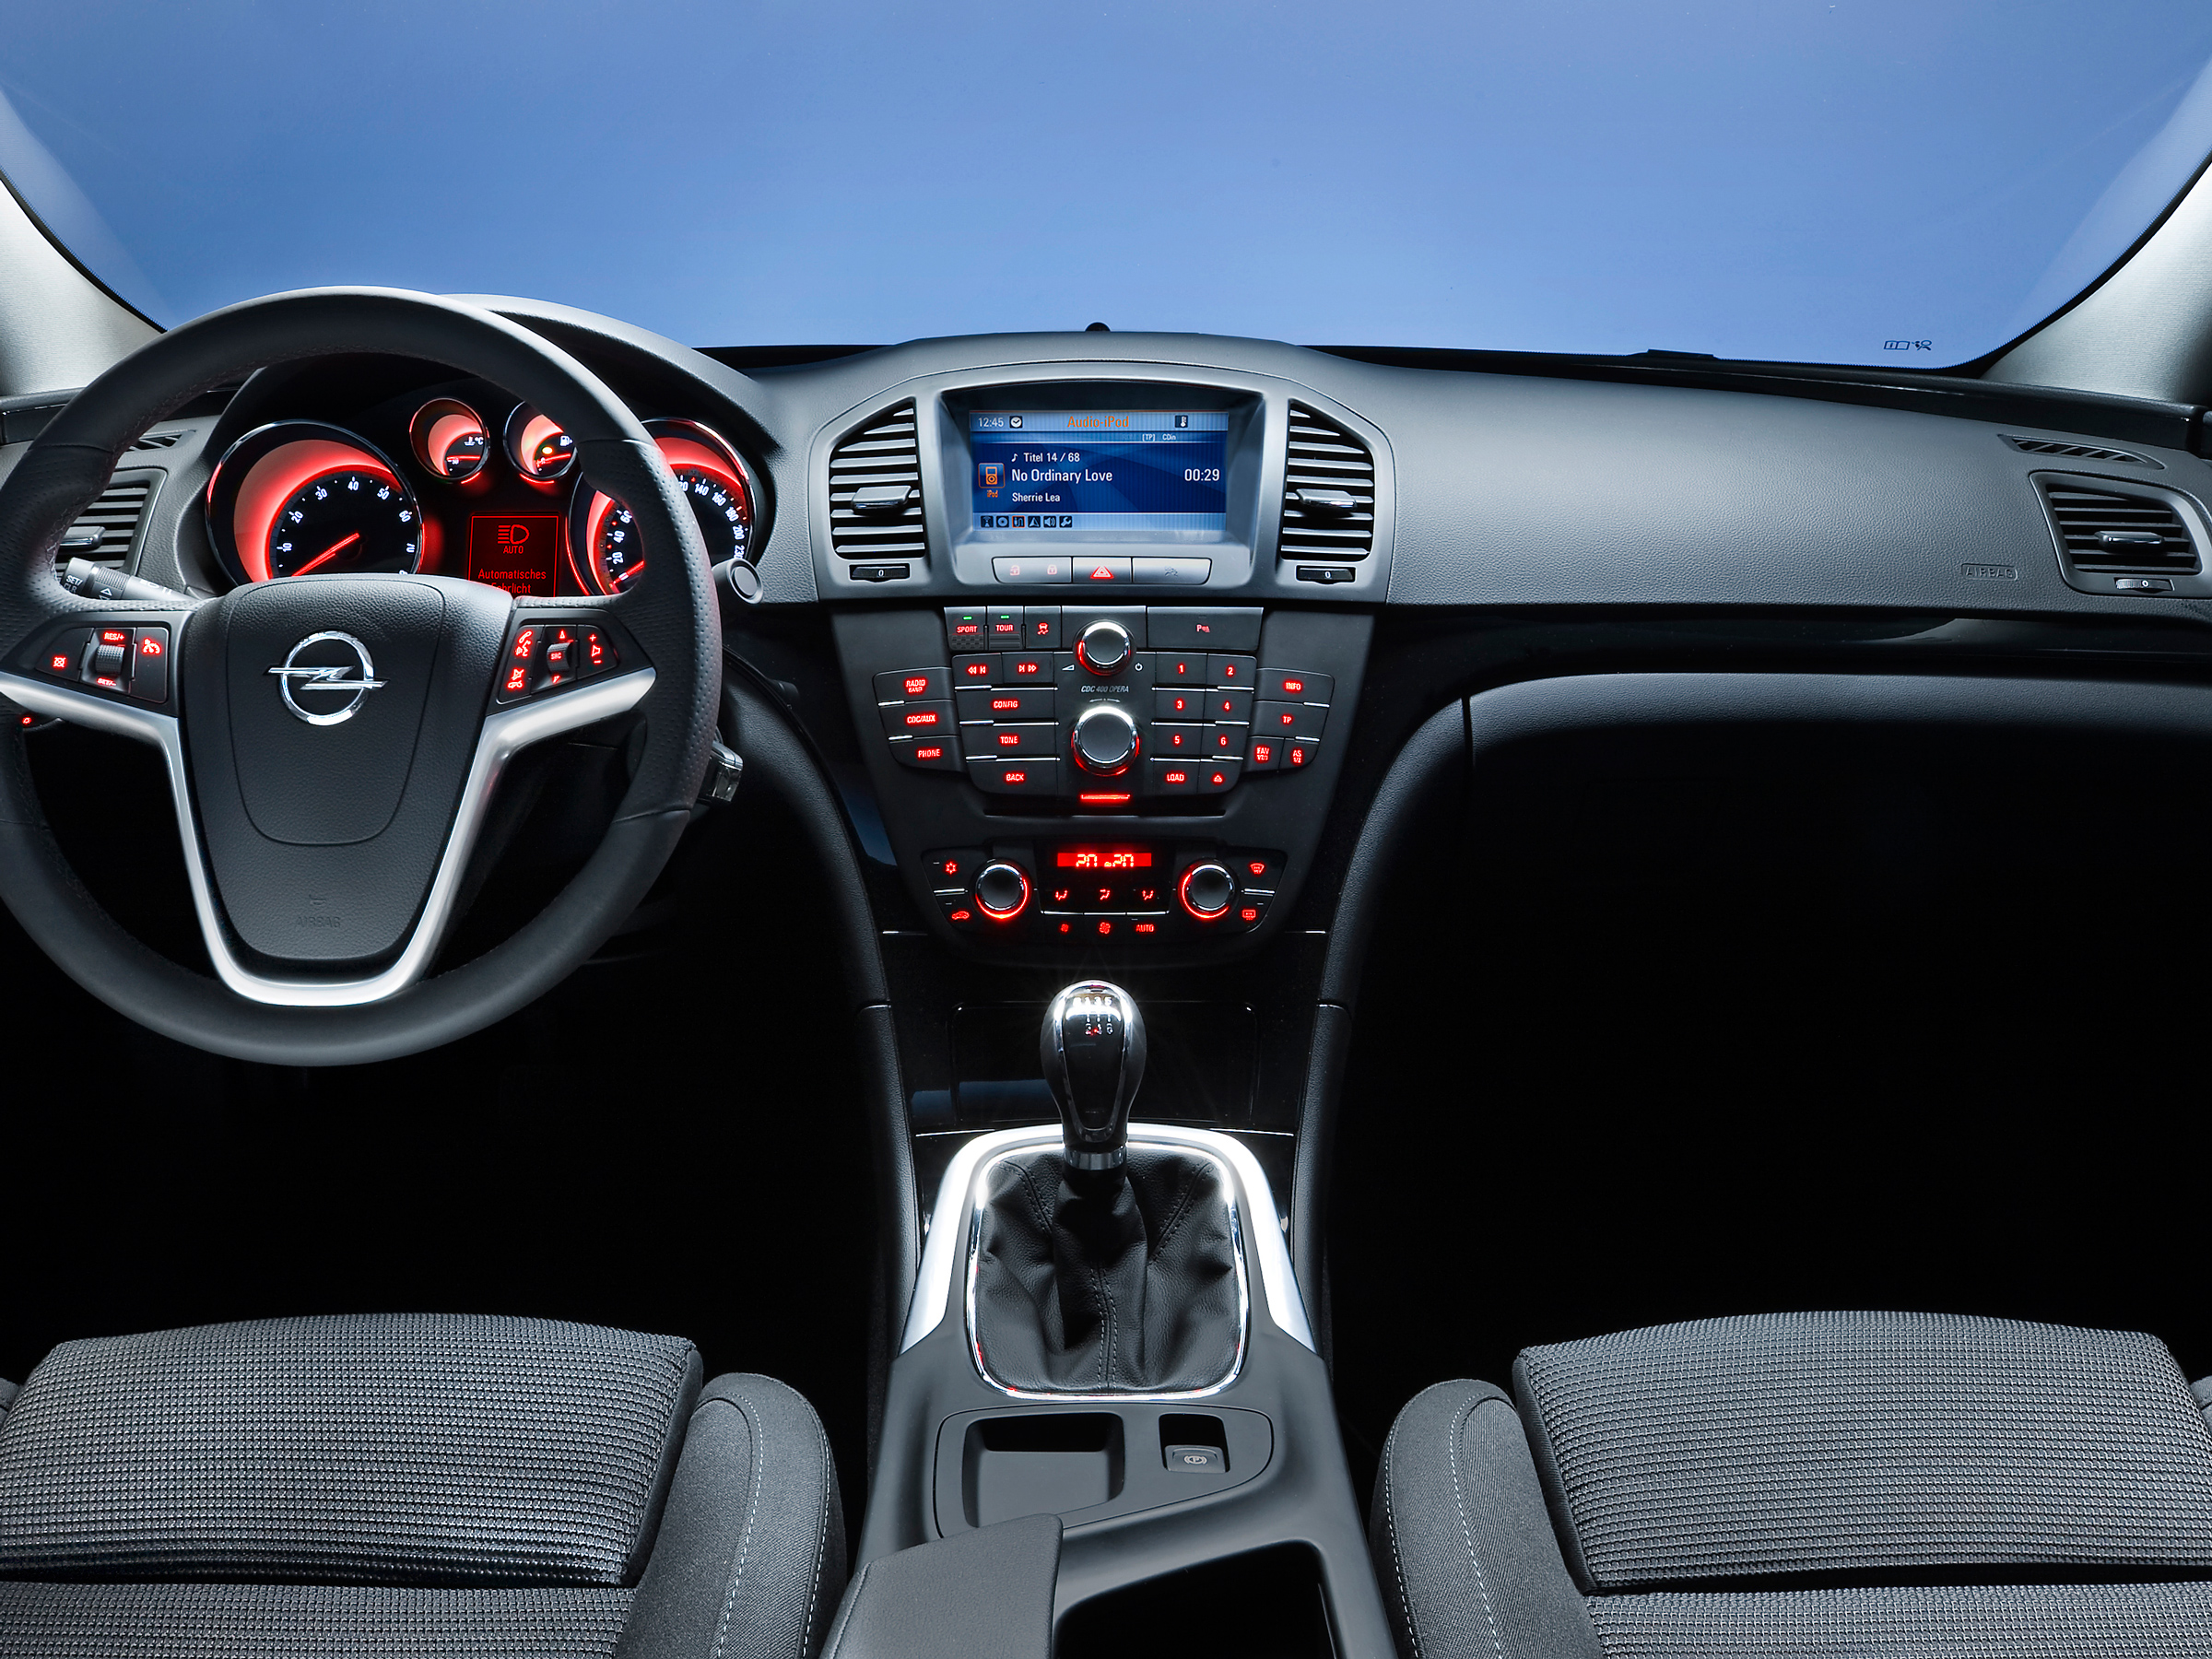 Opel insignia 1.8. Опель Инсигния 2011 1.8 механика. Опель Инсигния 2013 салон. Опель Инсигния 2014 2.0 турбо универсал. Опель Инсигния 2013 1.8 механика.